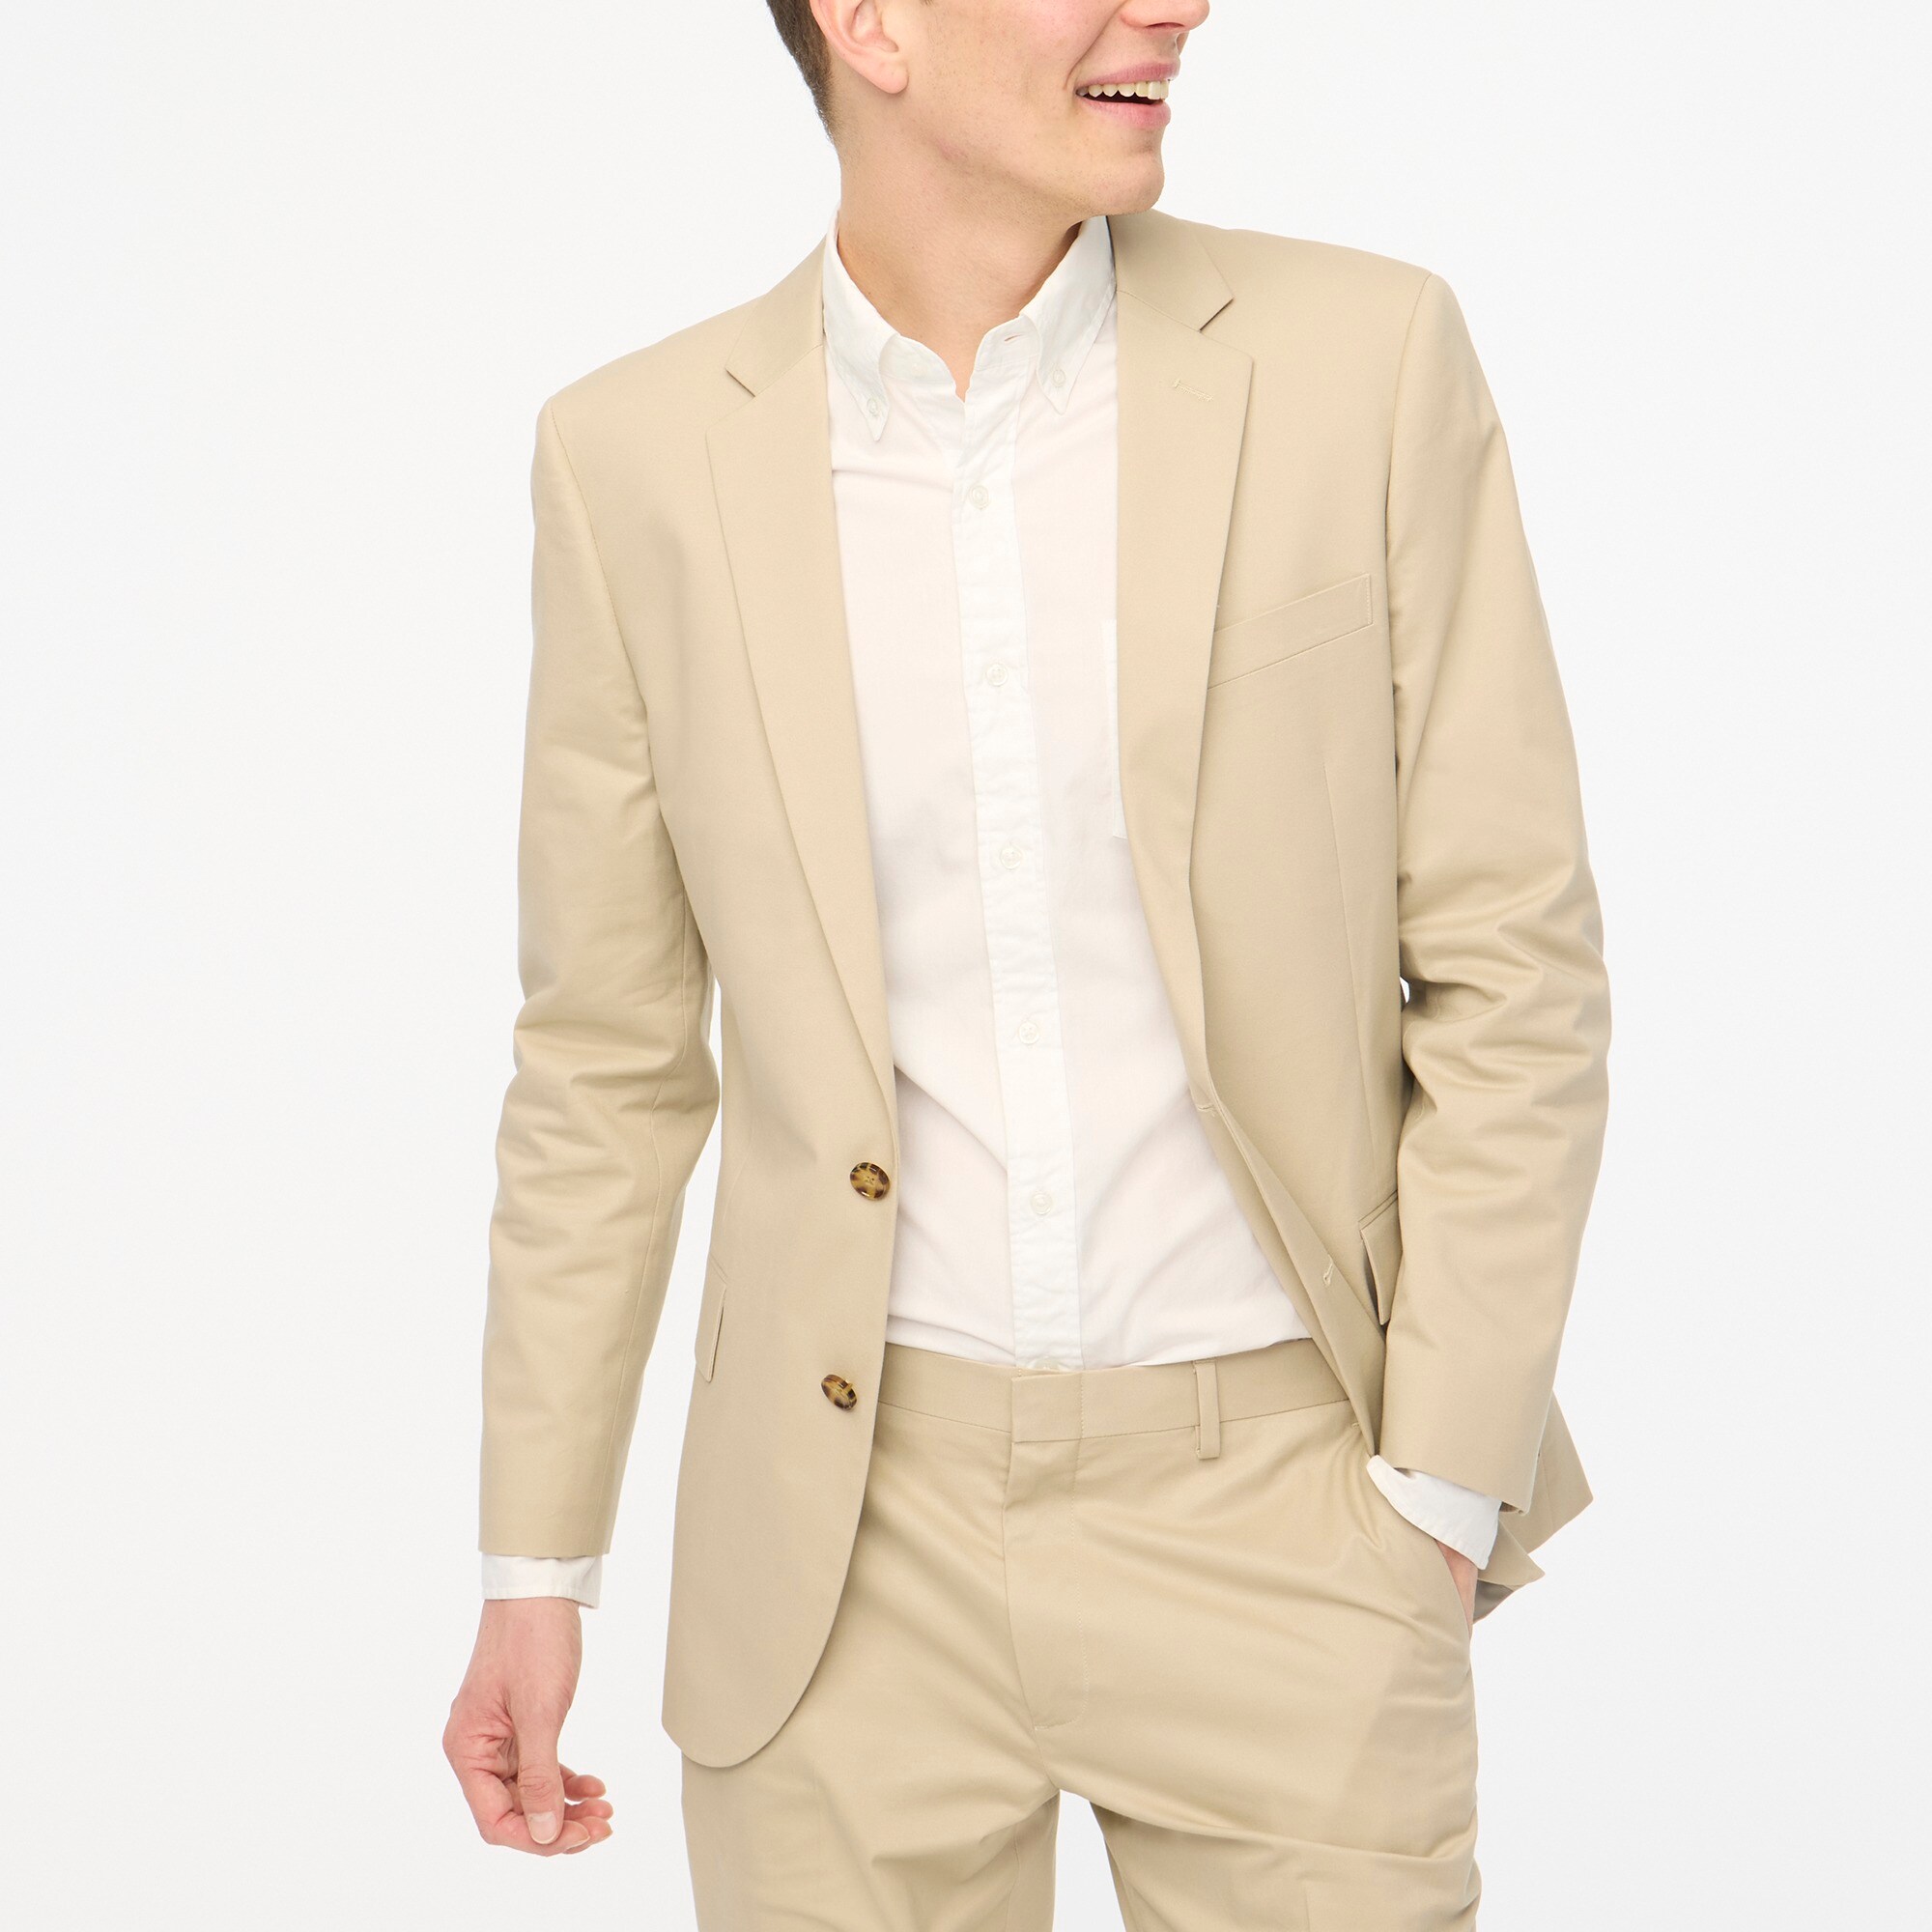 mens Slim-fit Thompson chino suit jacket